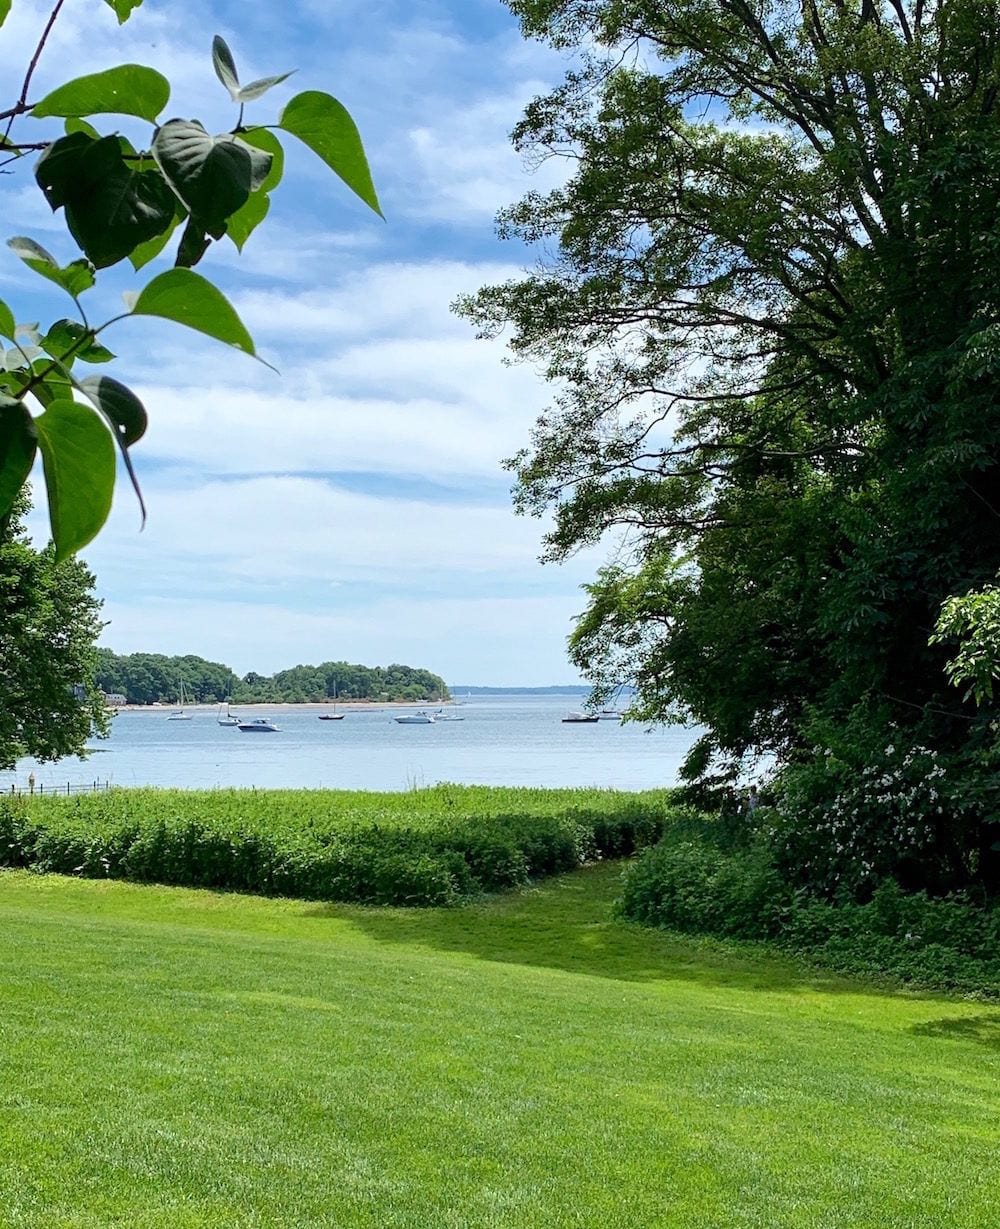 Grandiflora garden tour - Greenwich, CT 2019 - Long Island Sound - boats